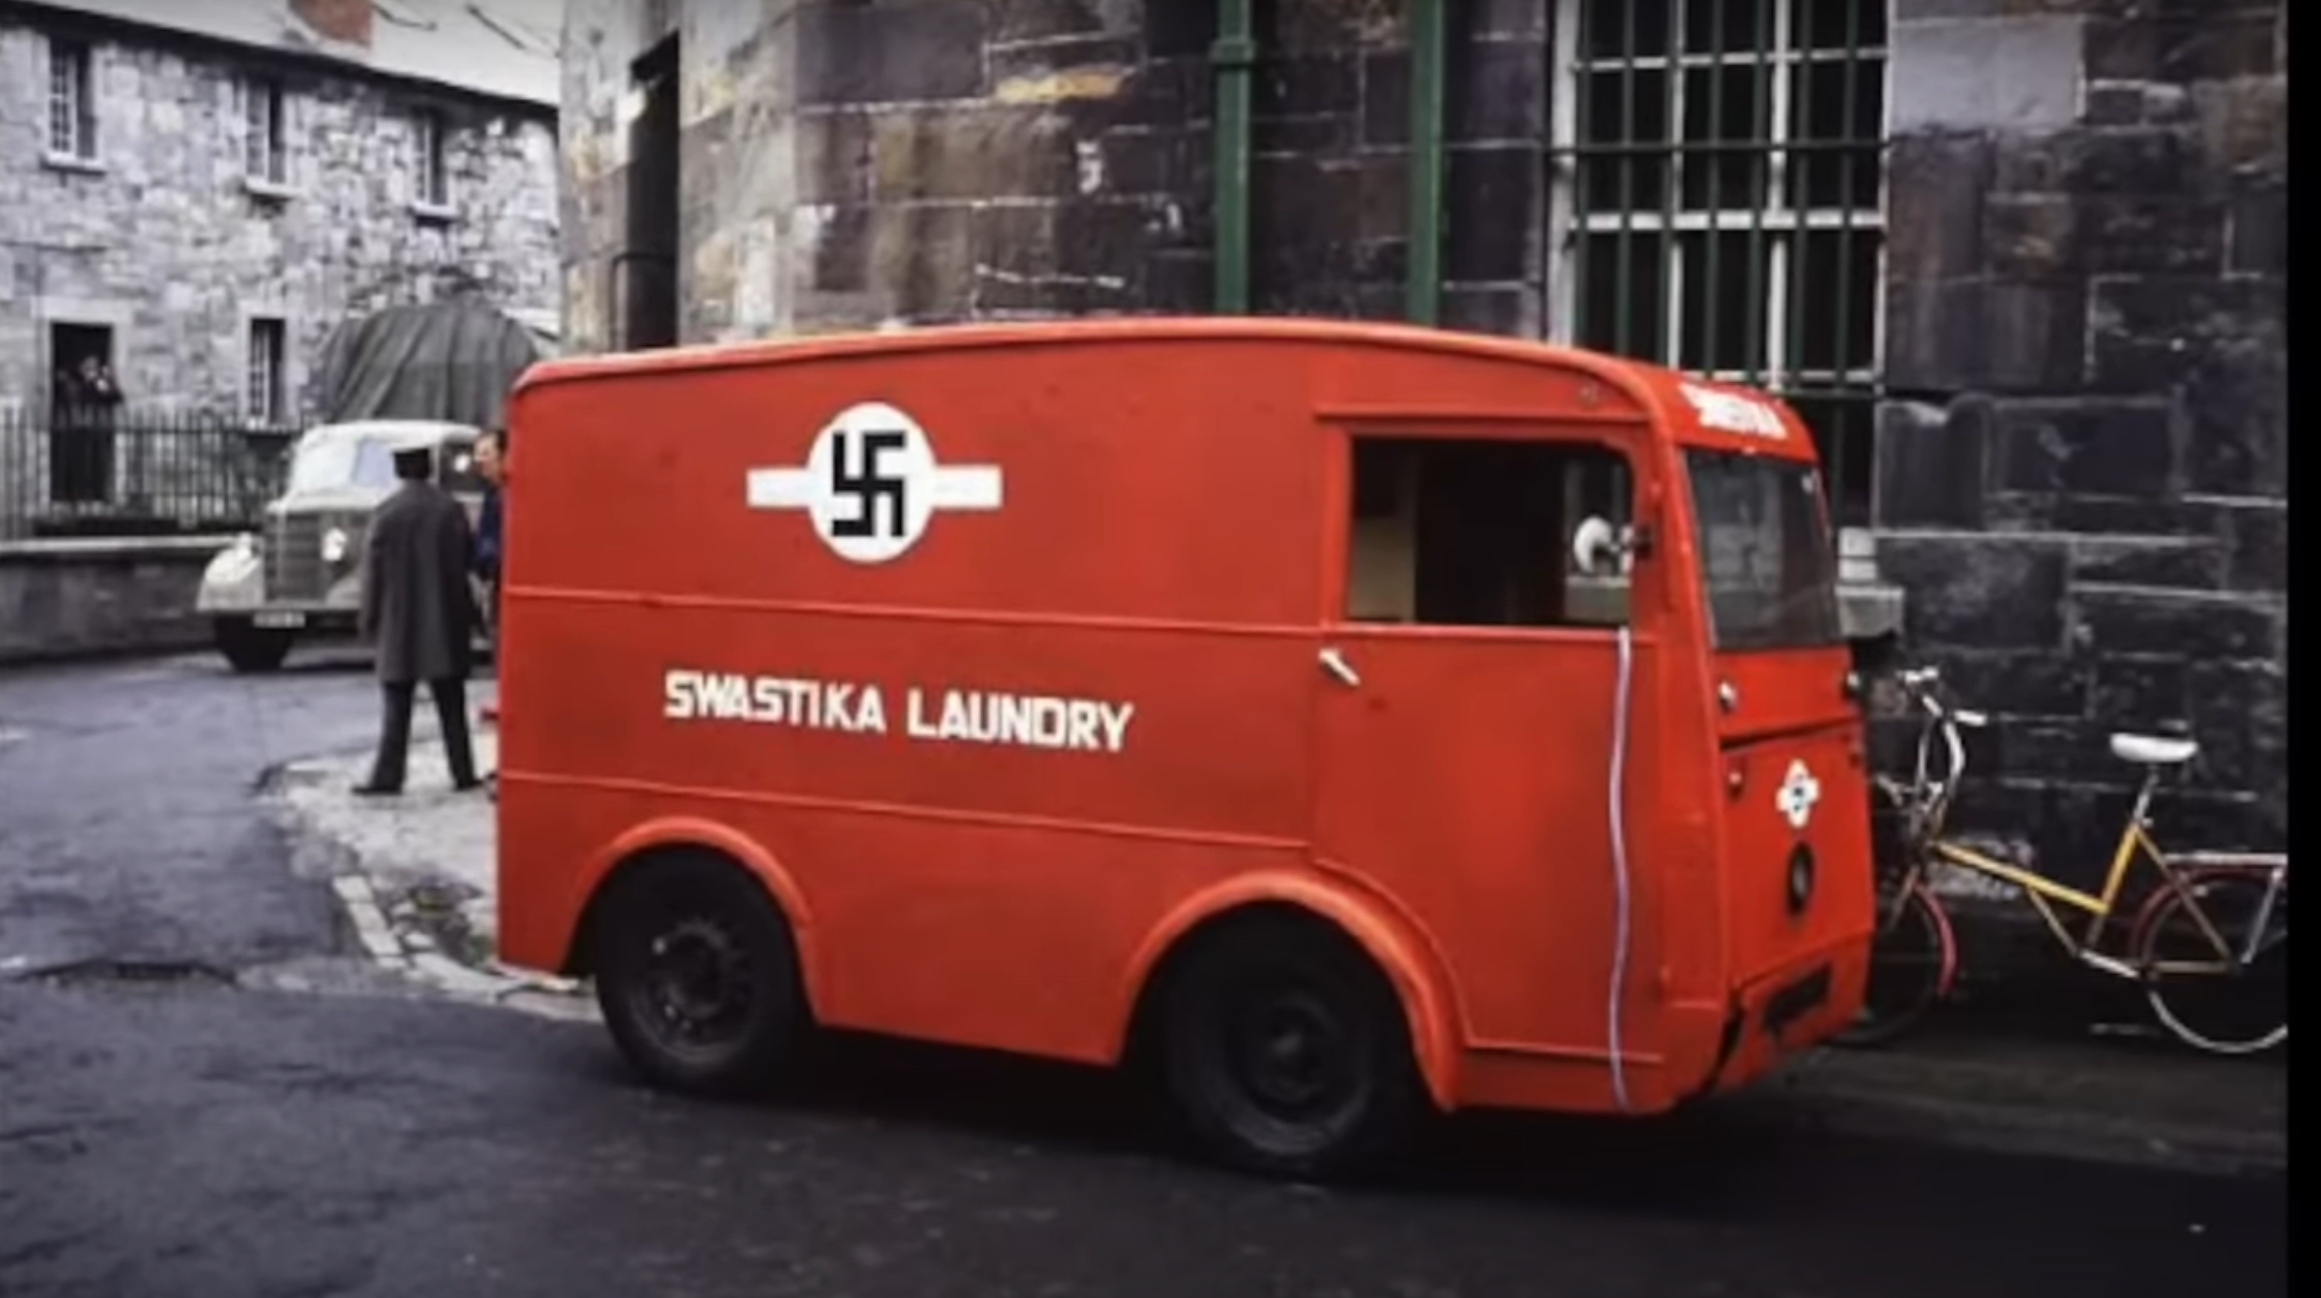 Swastika laundry Blank Meme Template